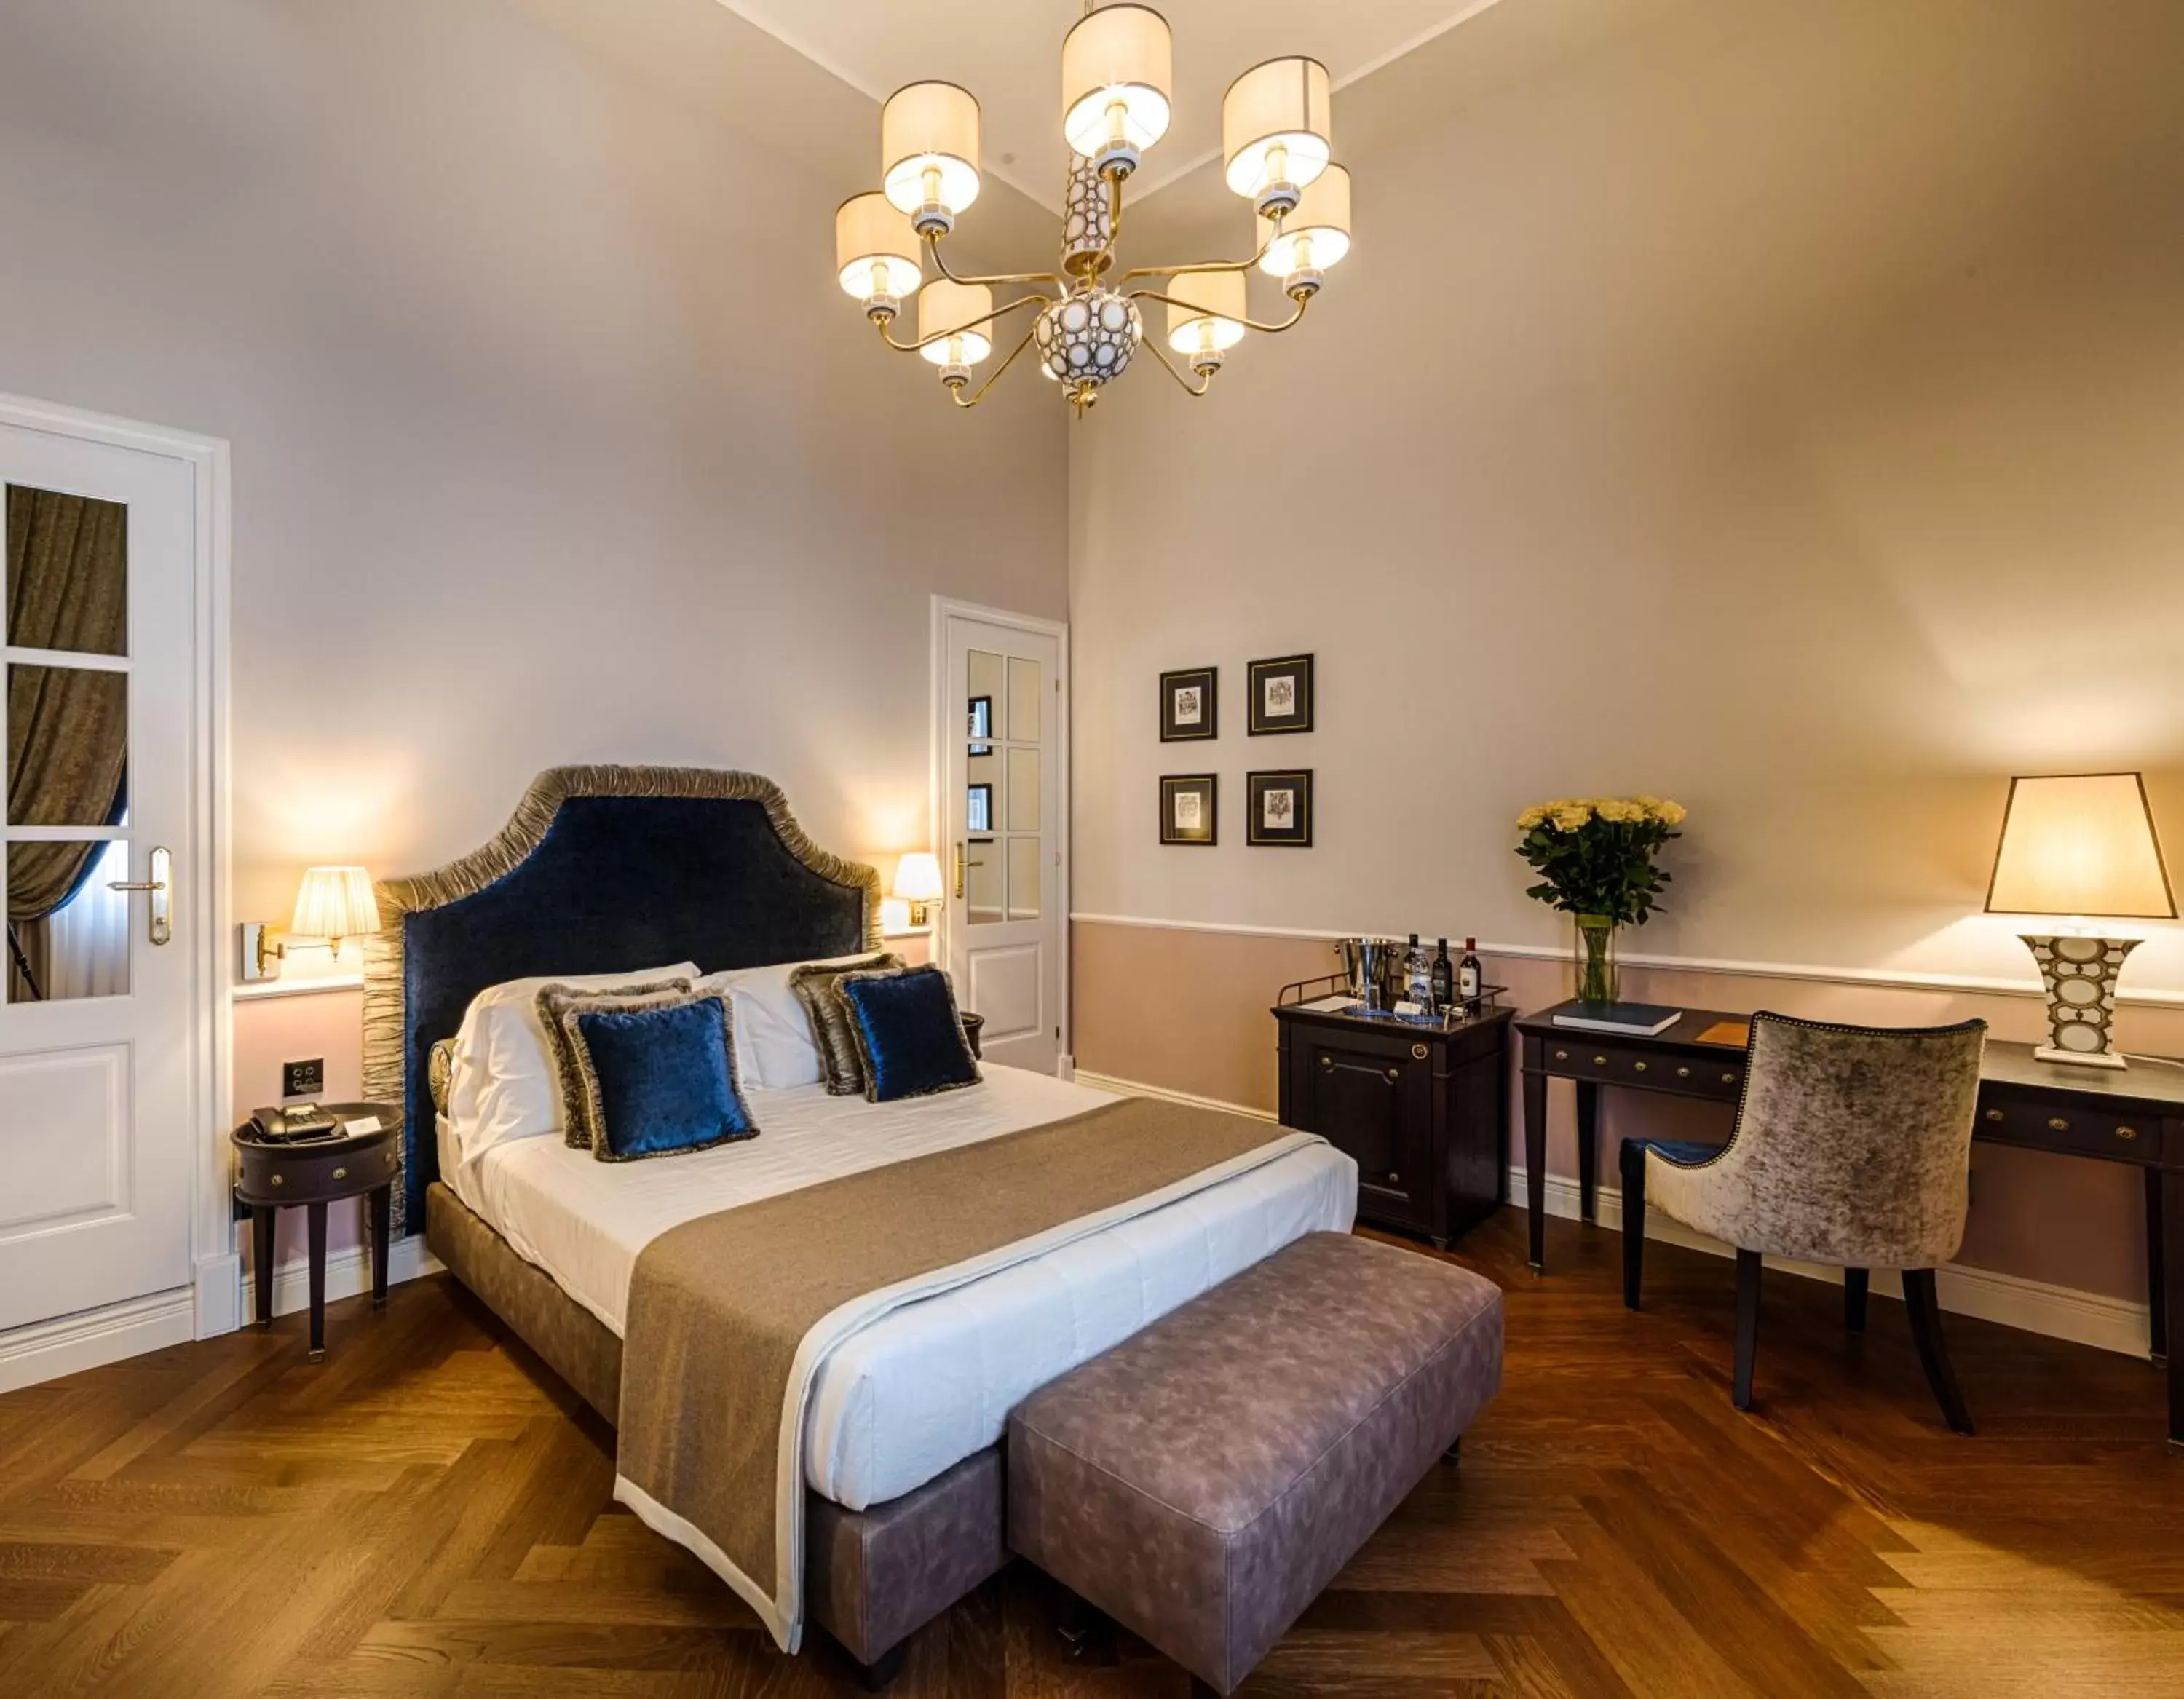 Bedroom, Room Photo in Palazzo Roselli Cecconi